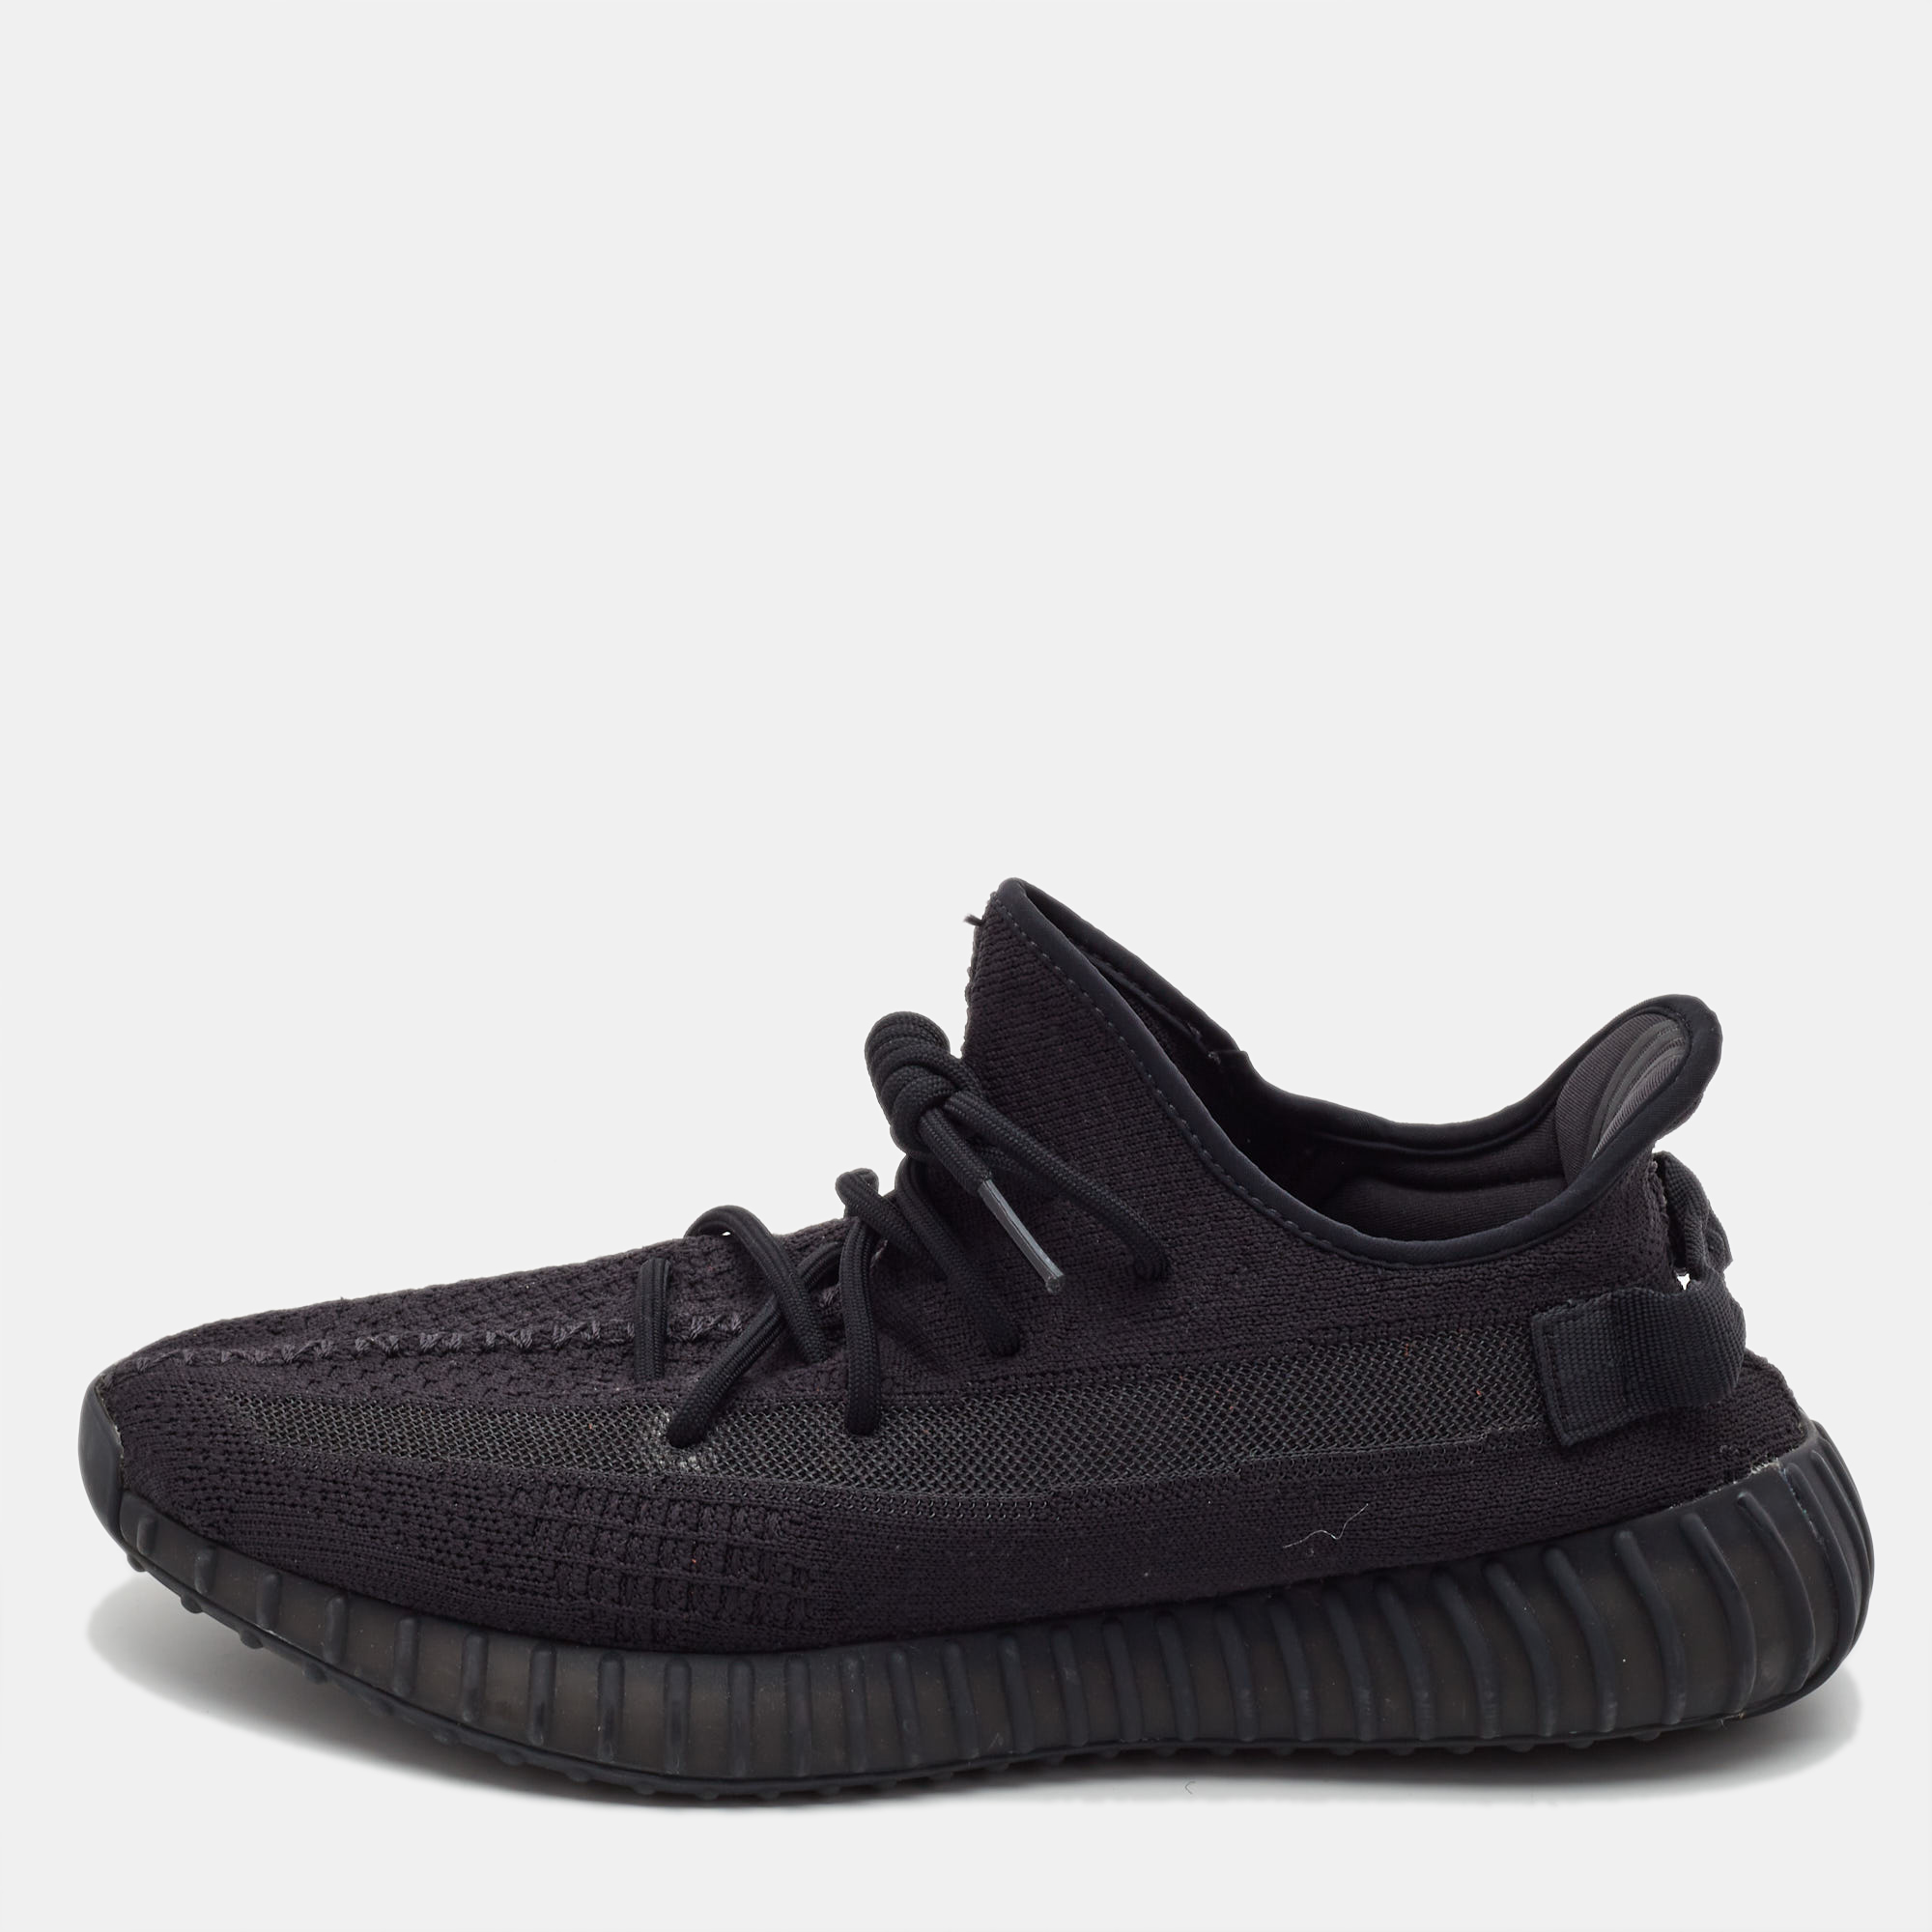 

Yeezy x Adidas Black Knit Fabric Boost 350 V2 Onyx Sneakers Size 46 2/3